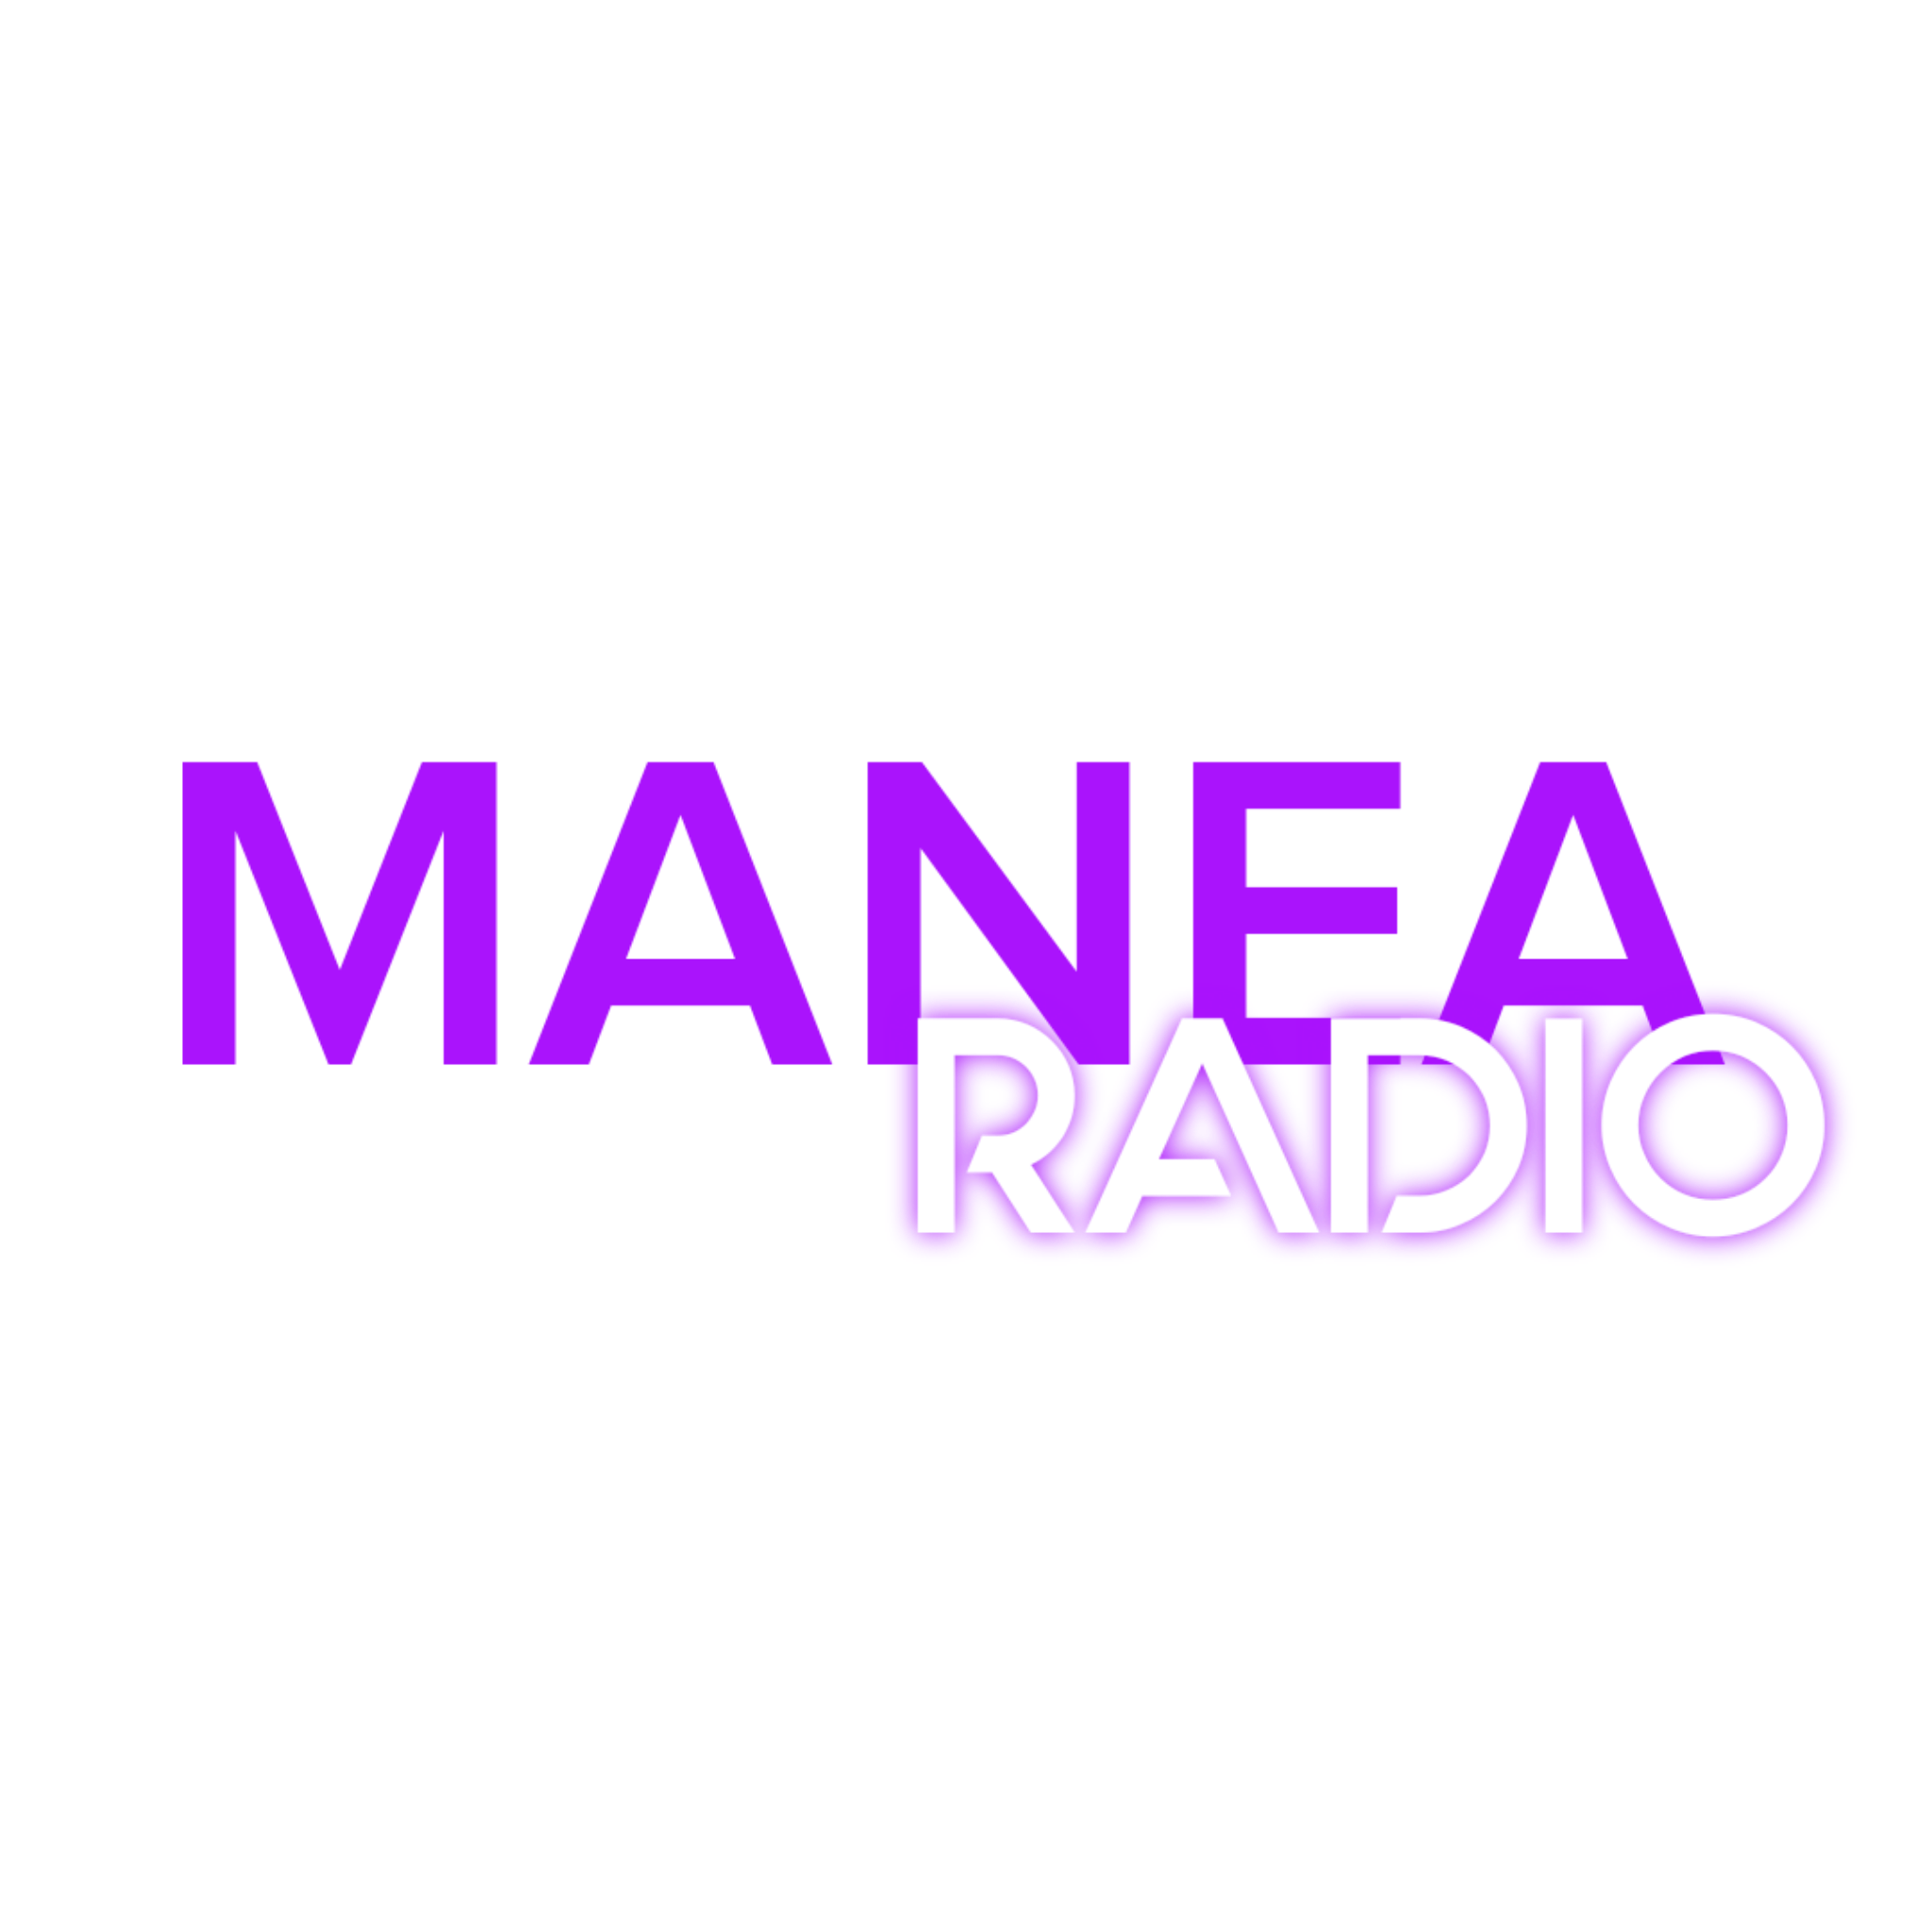 Radio Manea Romania | www.radiomanea.ro